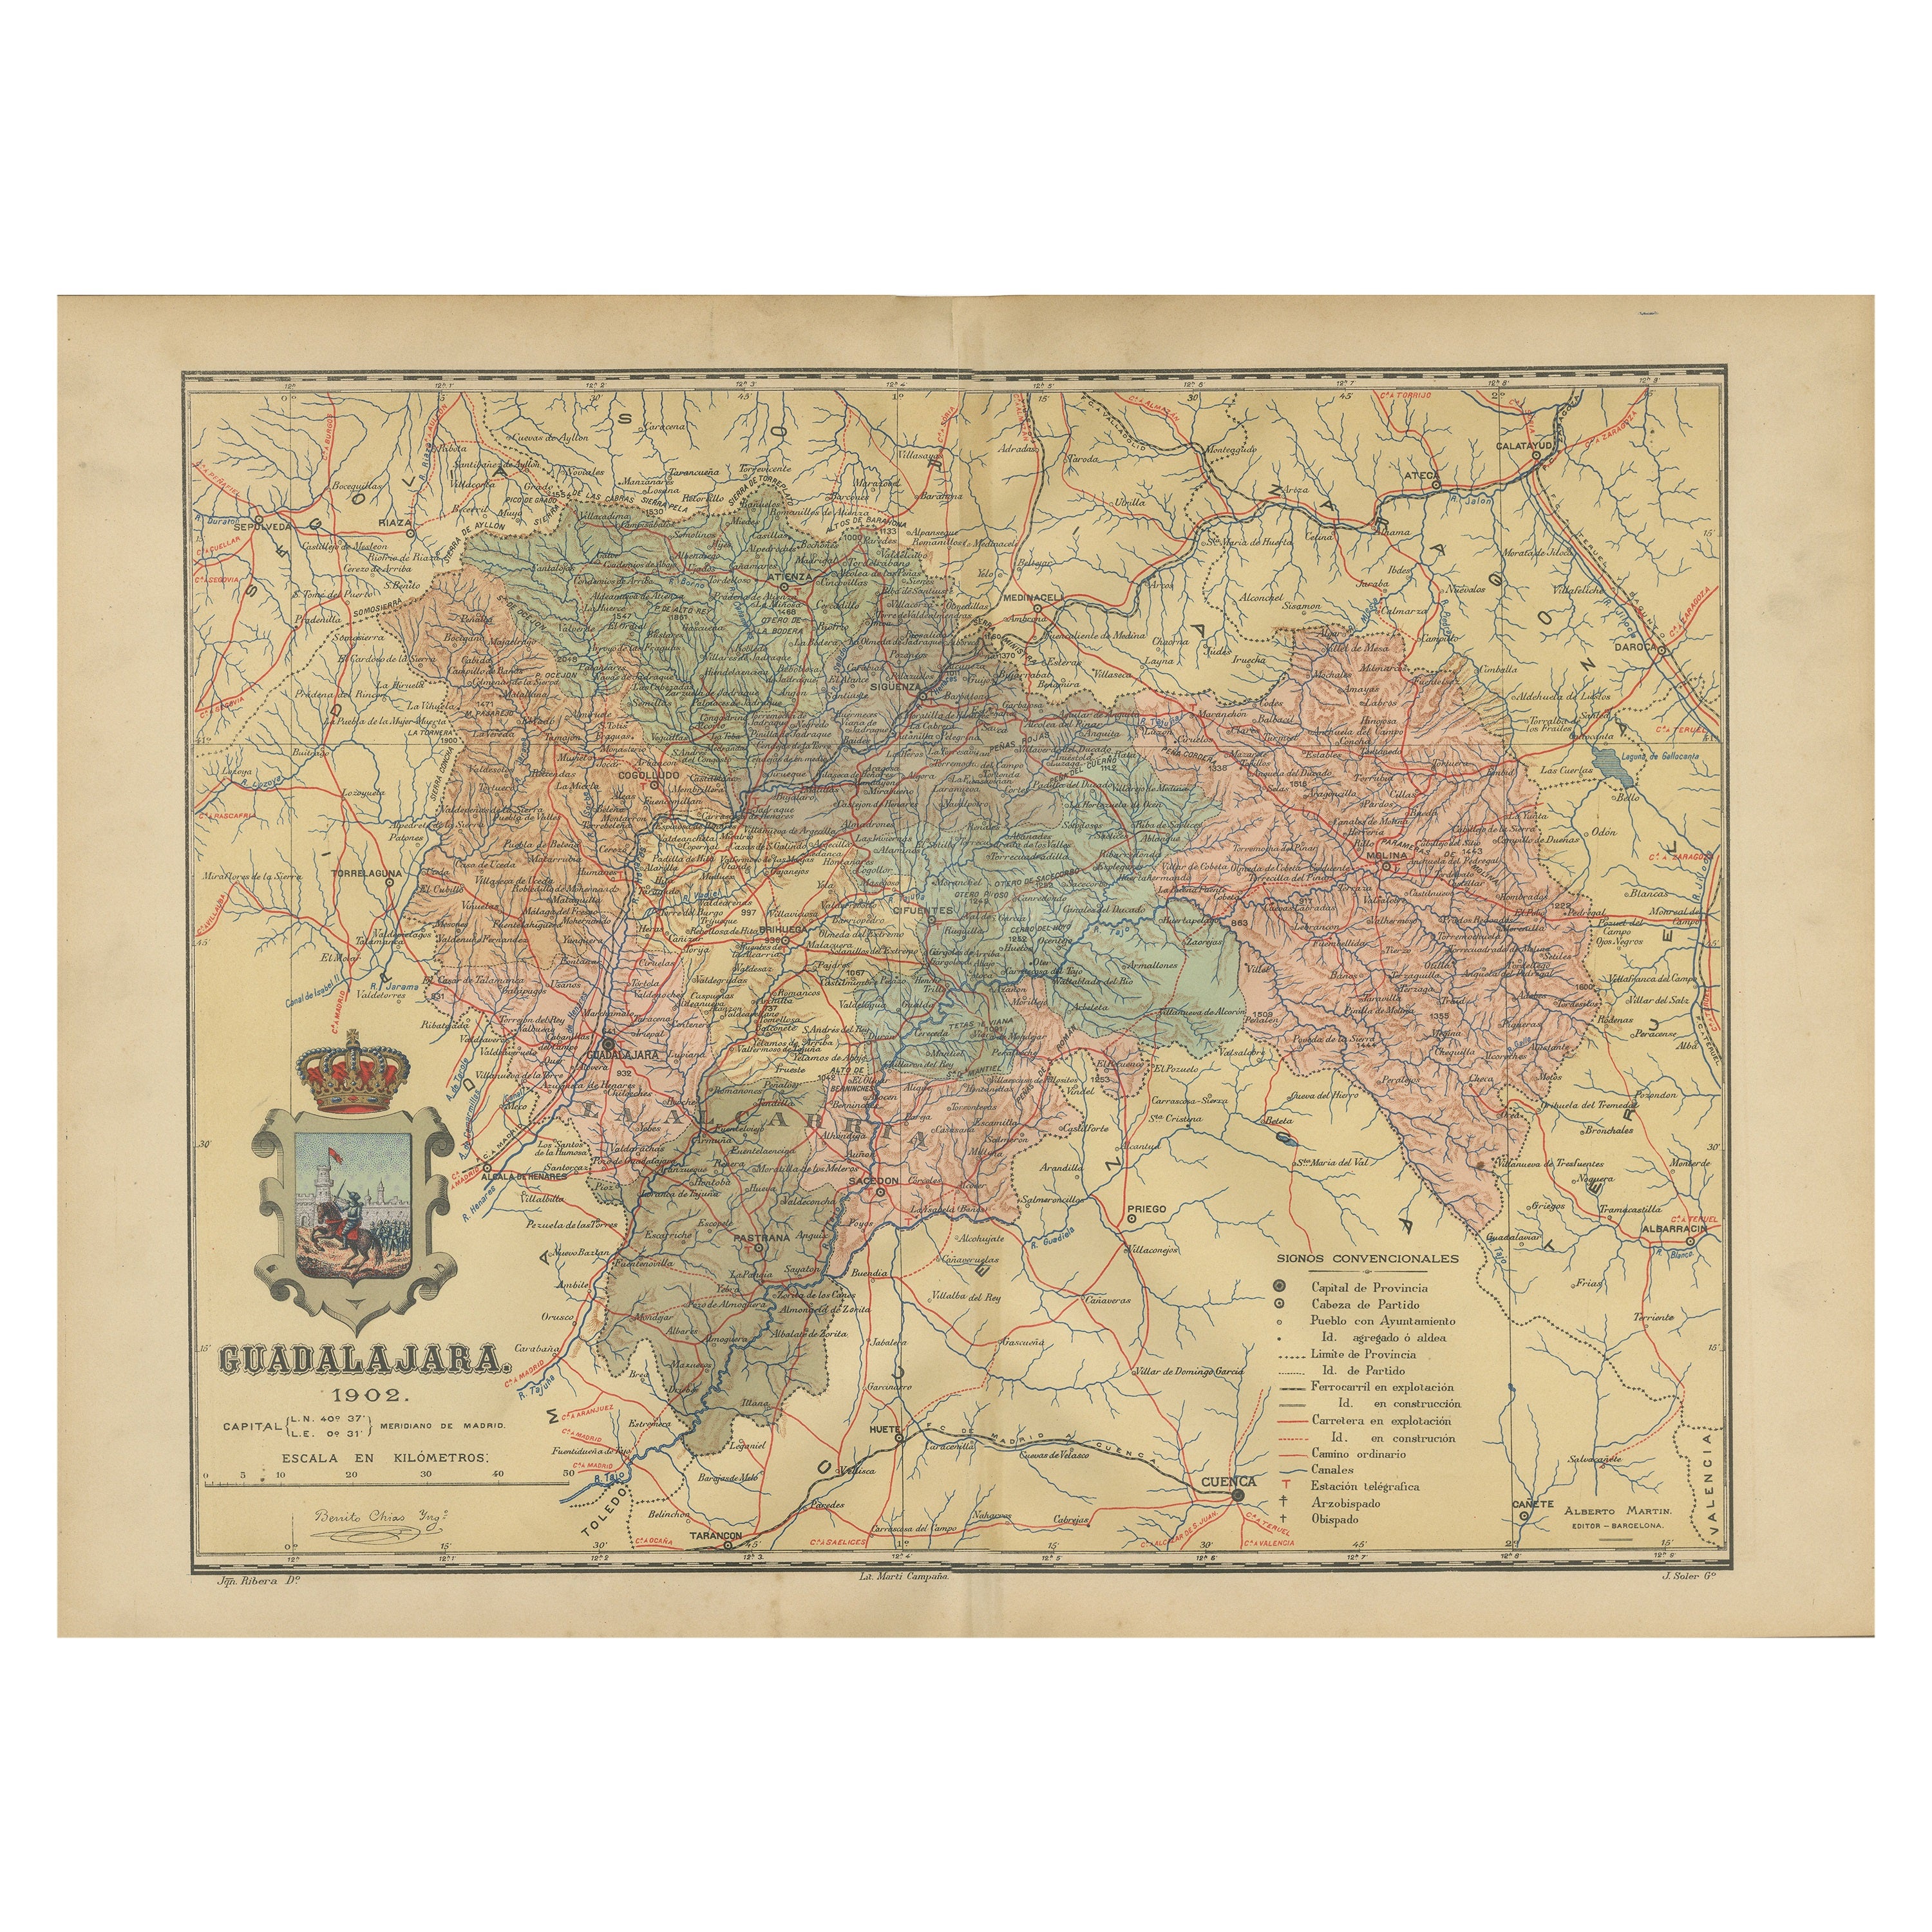 Guadalajara 1902: A Cartographic Image of Castilla-La Mancha's Northern Province For Sale